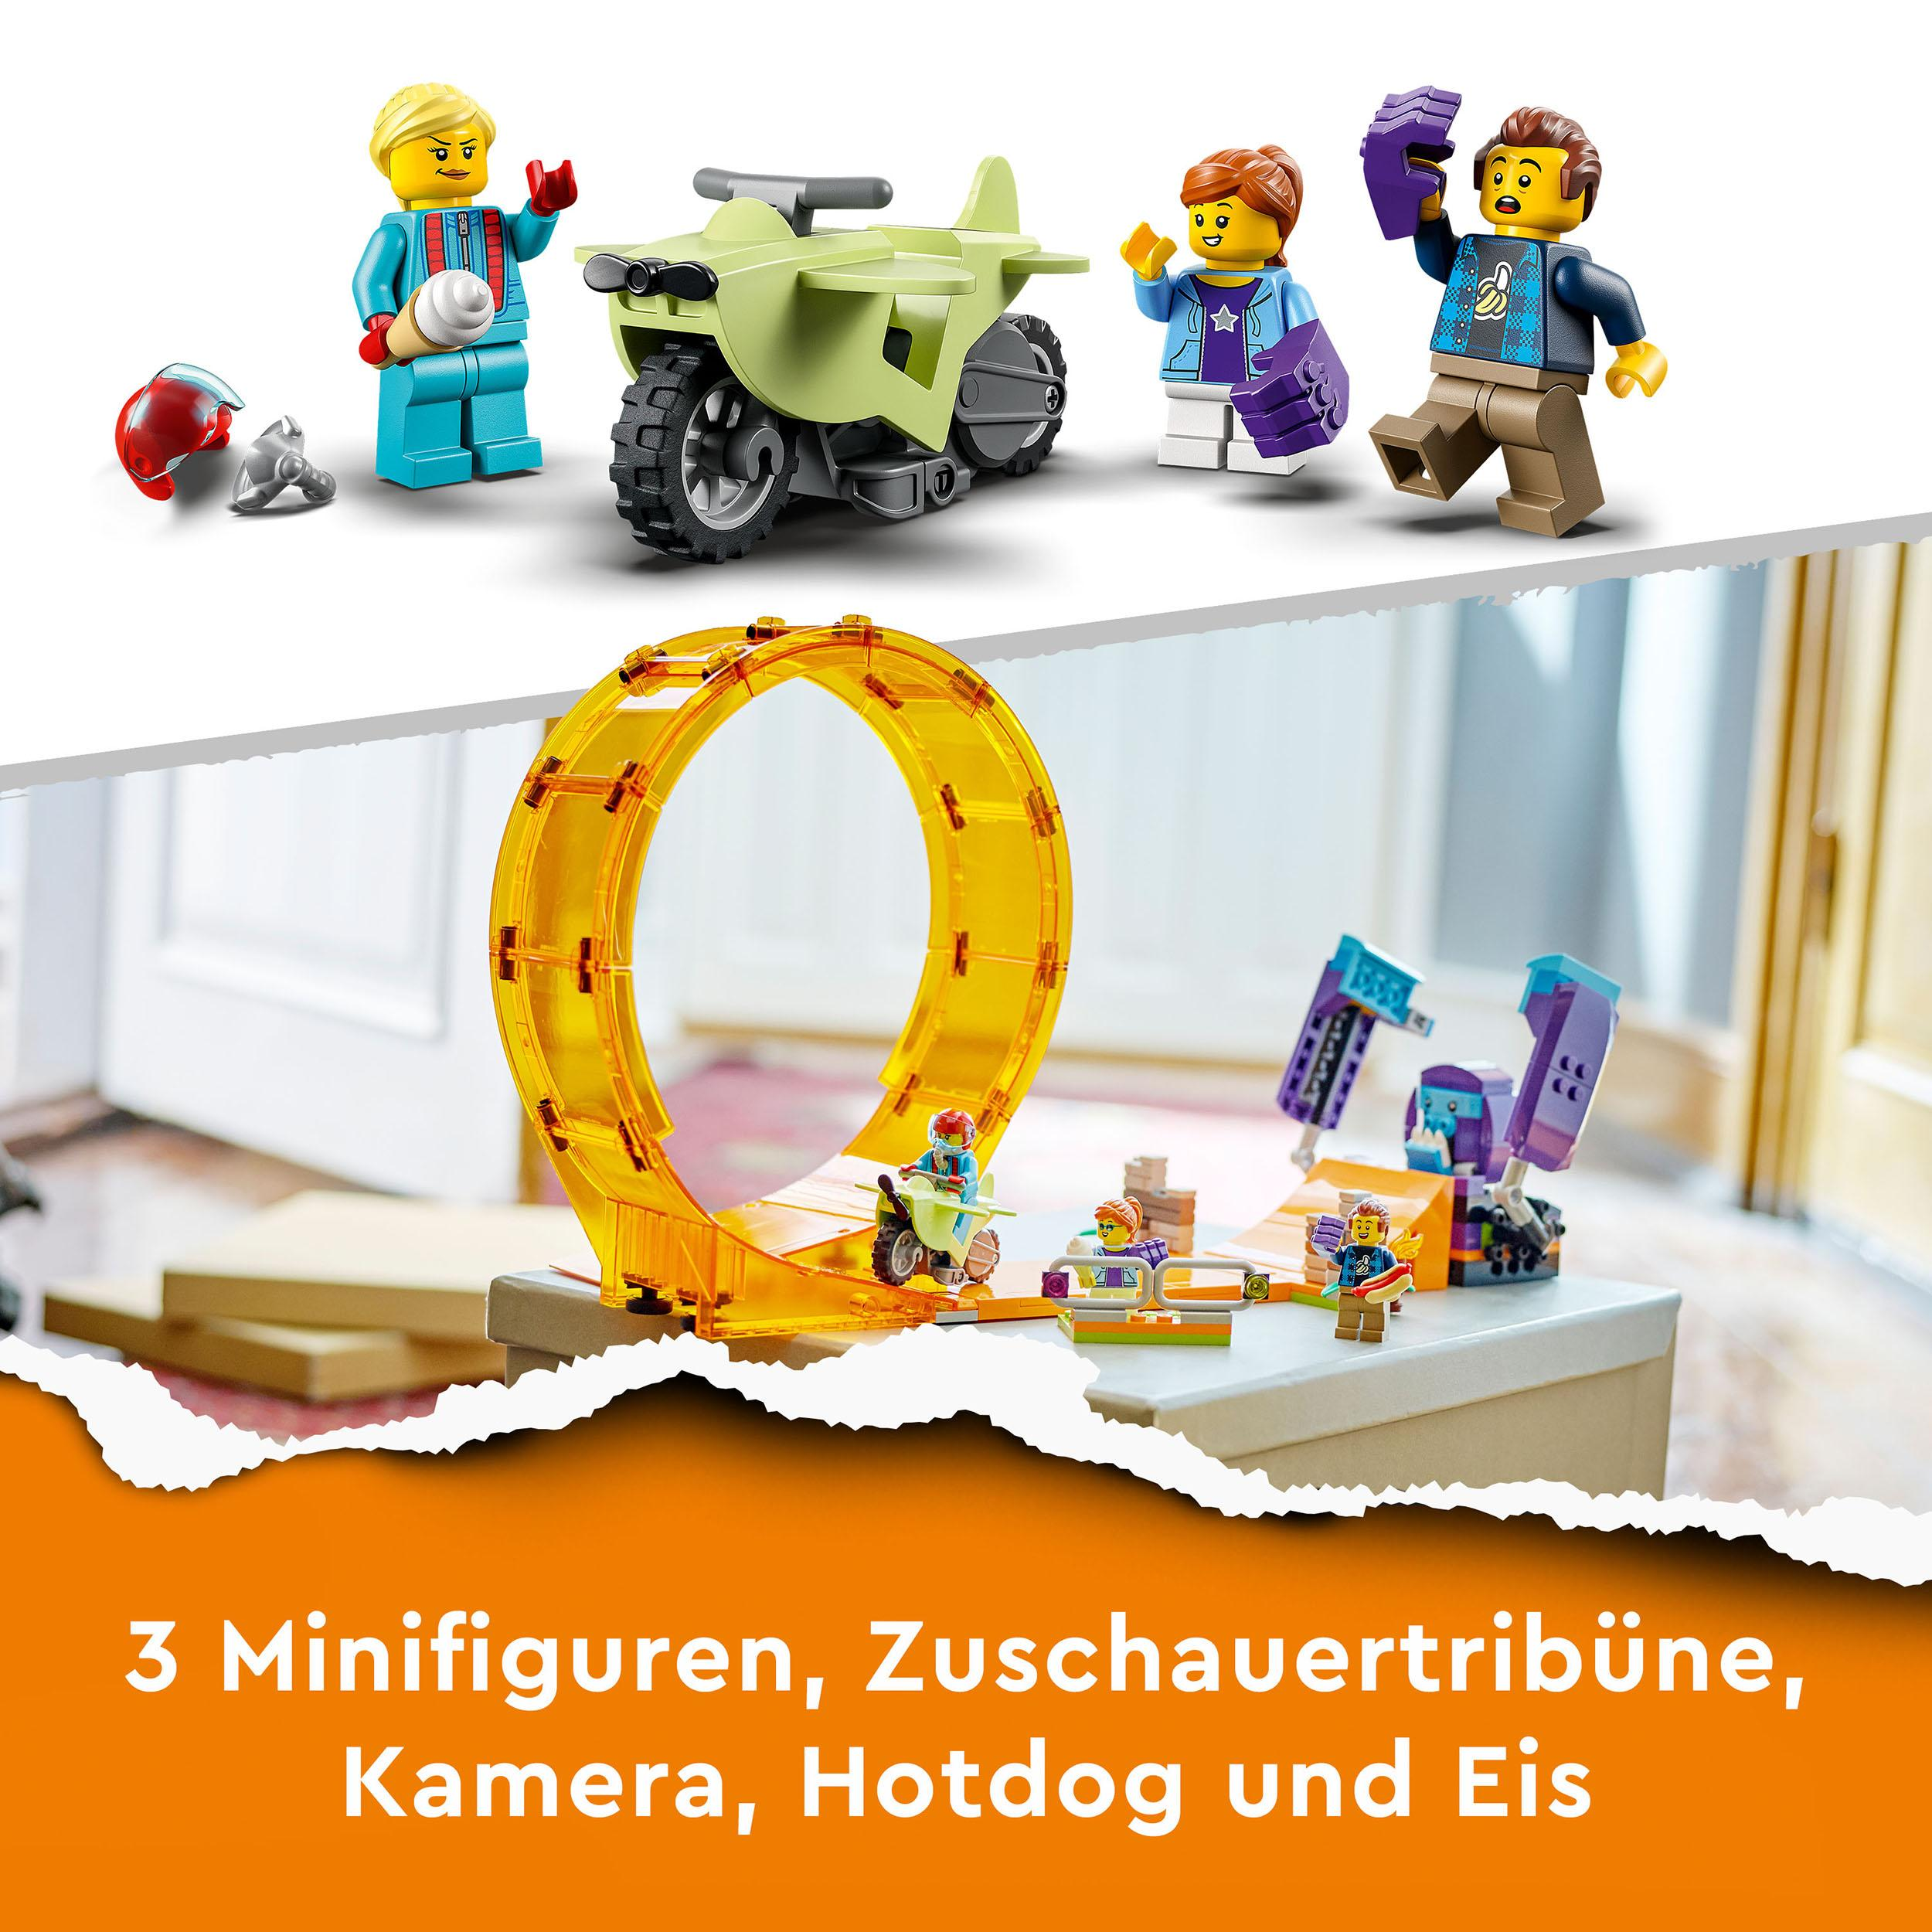 Stuntz 60338 Bausatz, Schimpansen-Stuntlooping Mehrfarbig LEGO City